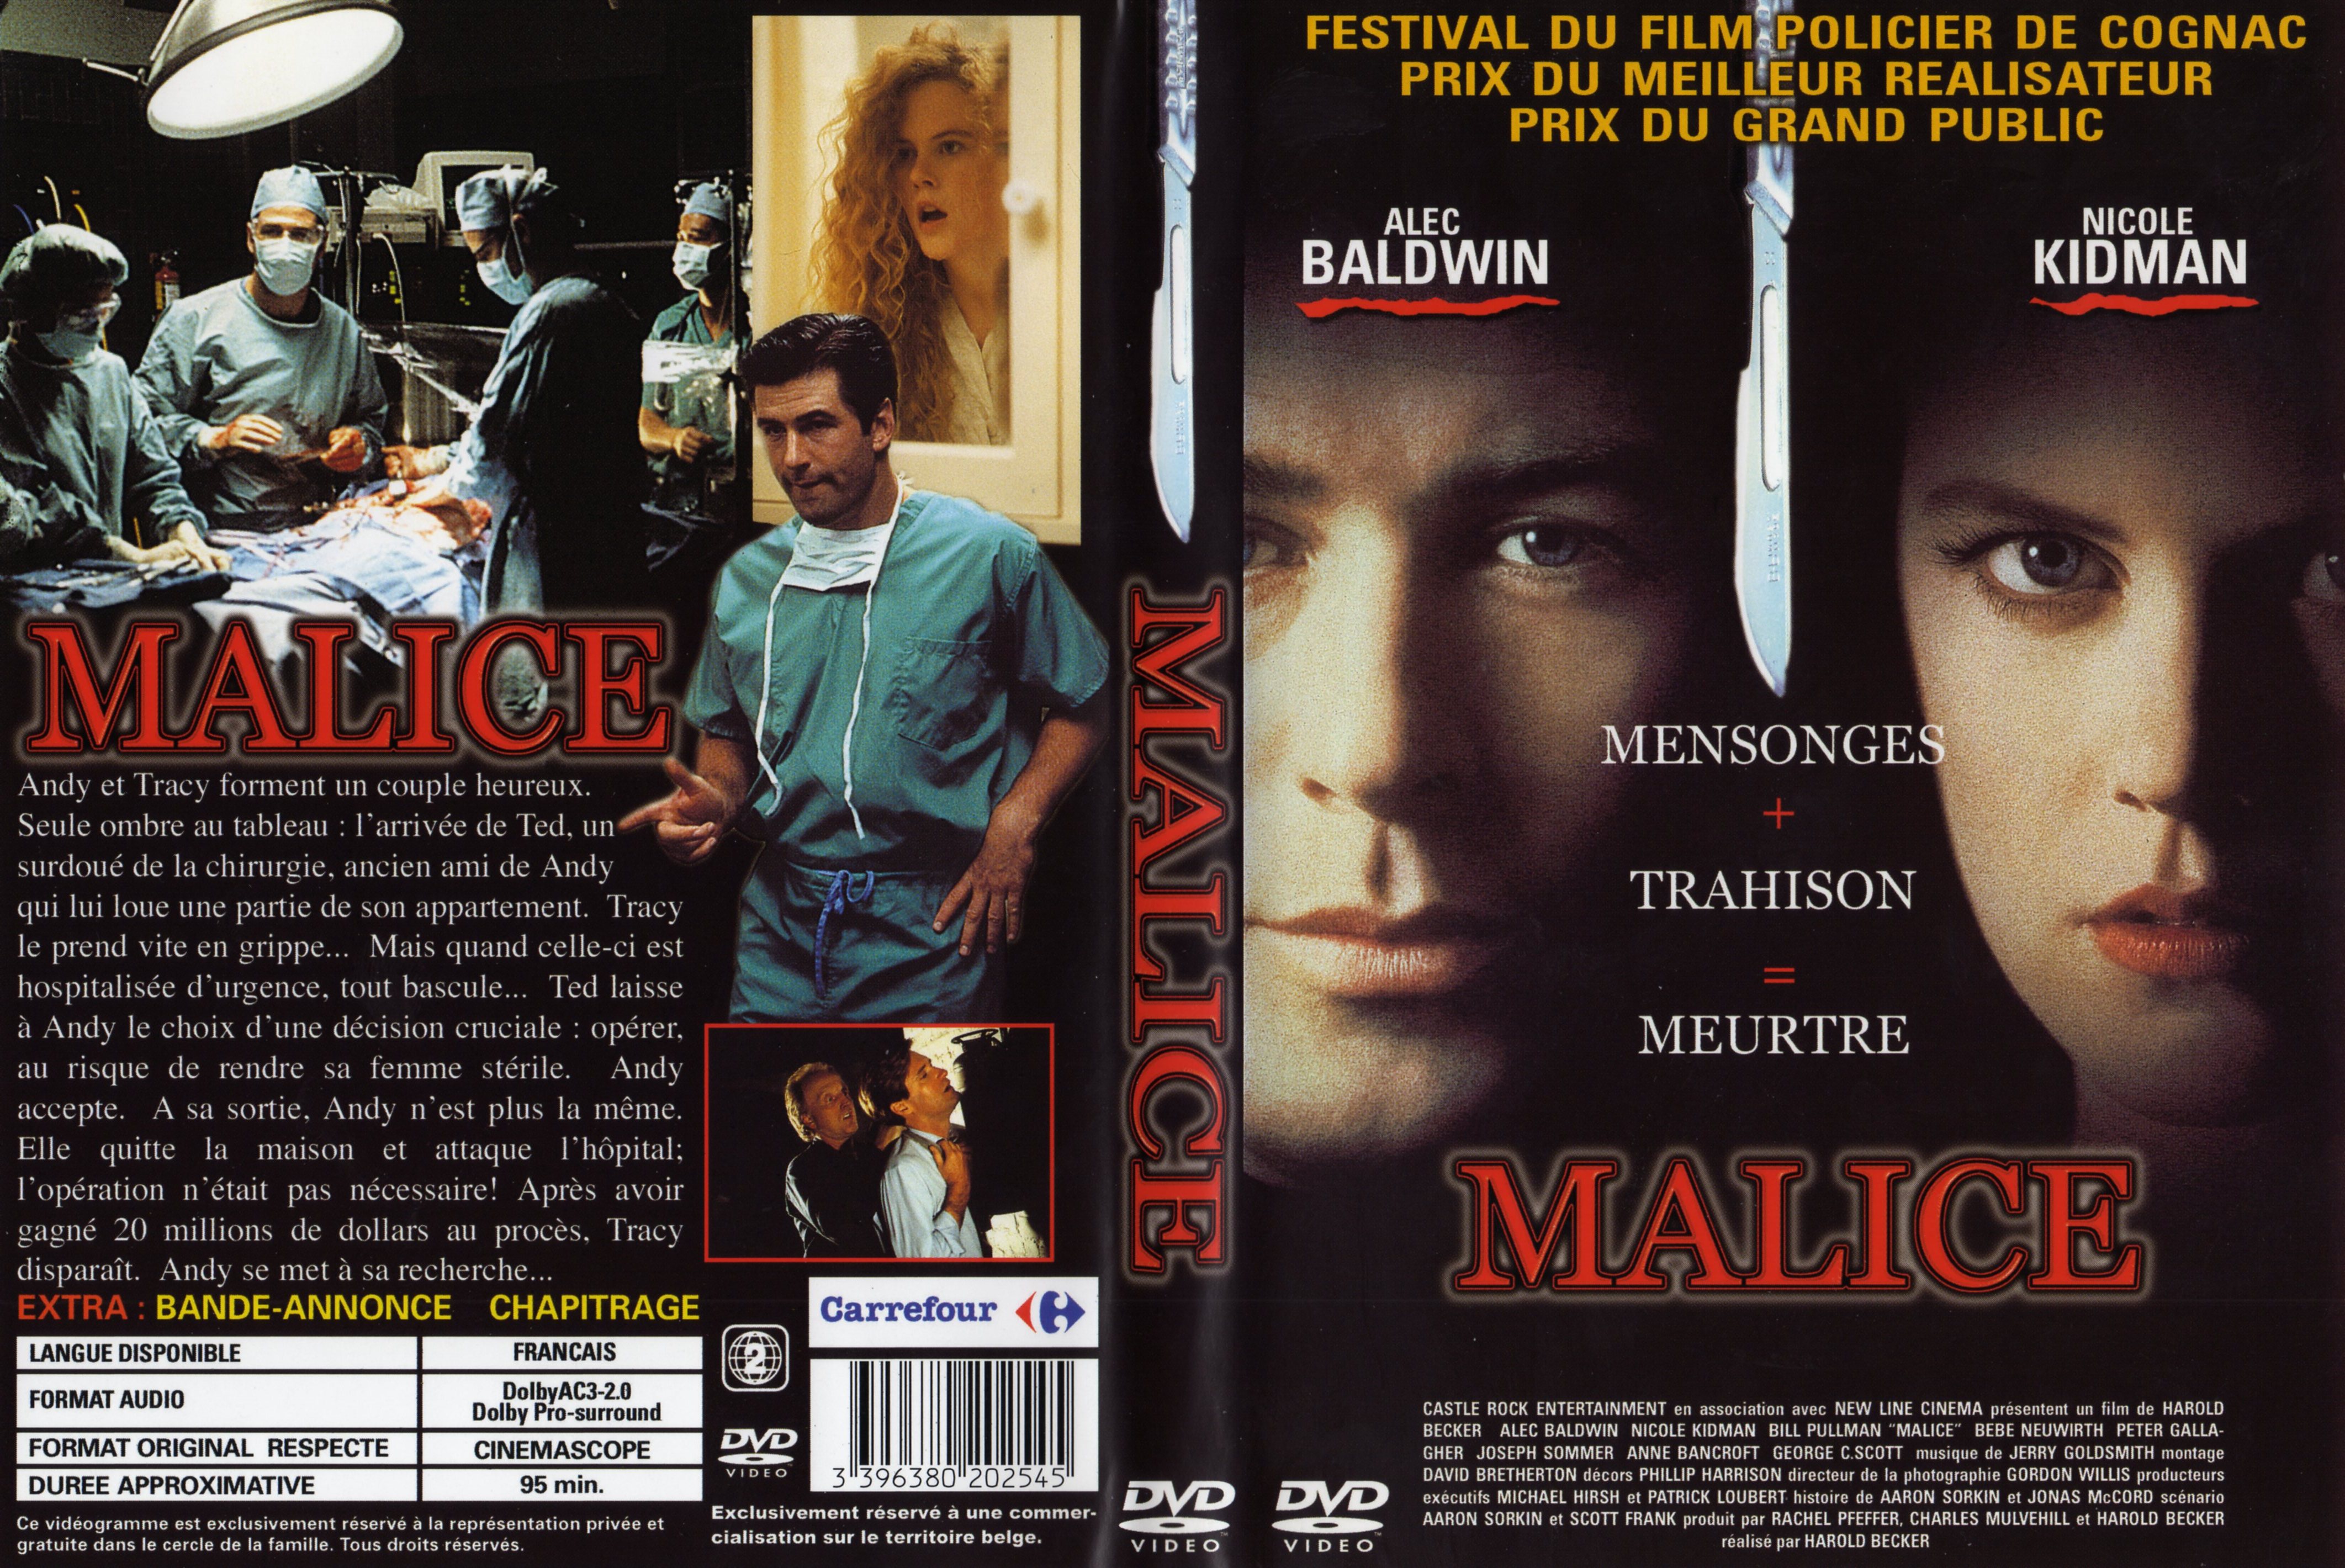 Jaquette DVD Malice v2